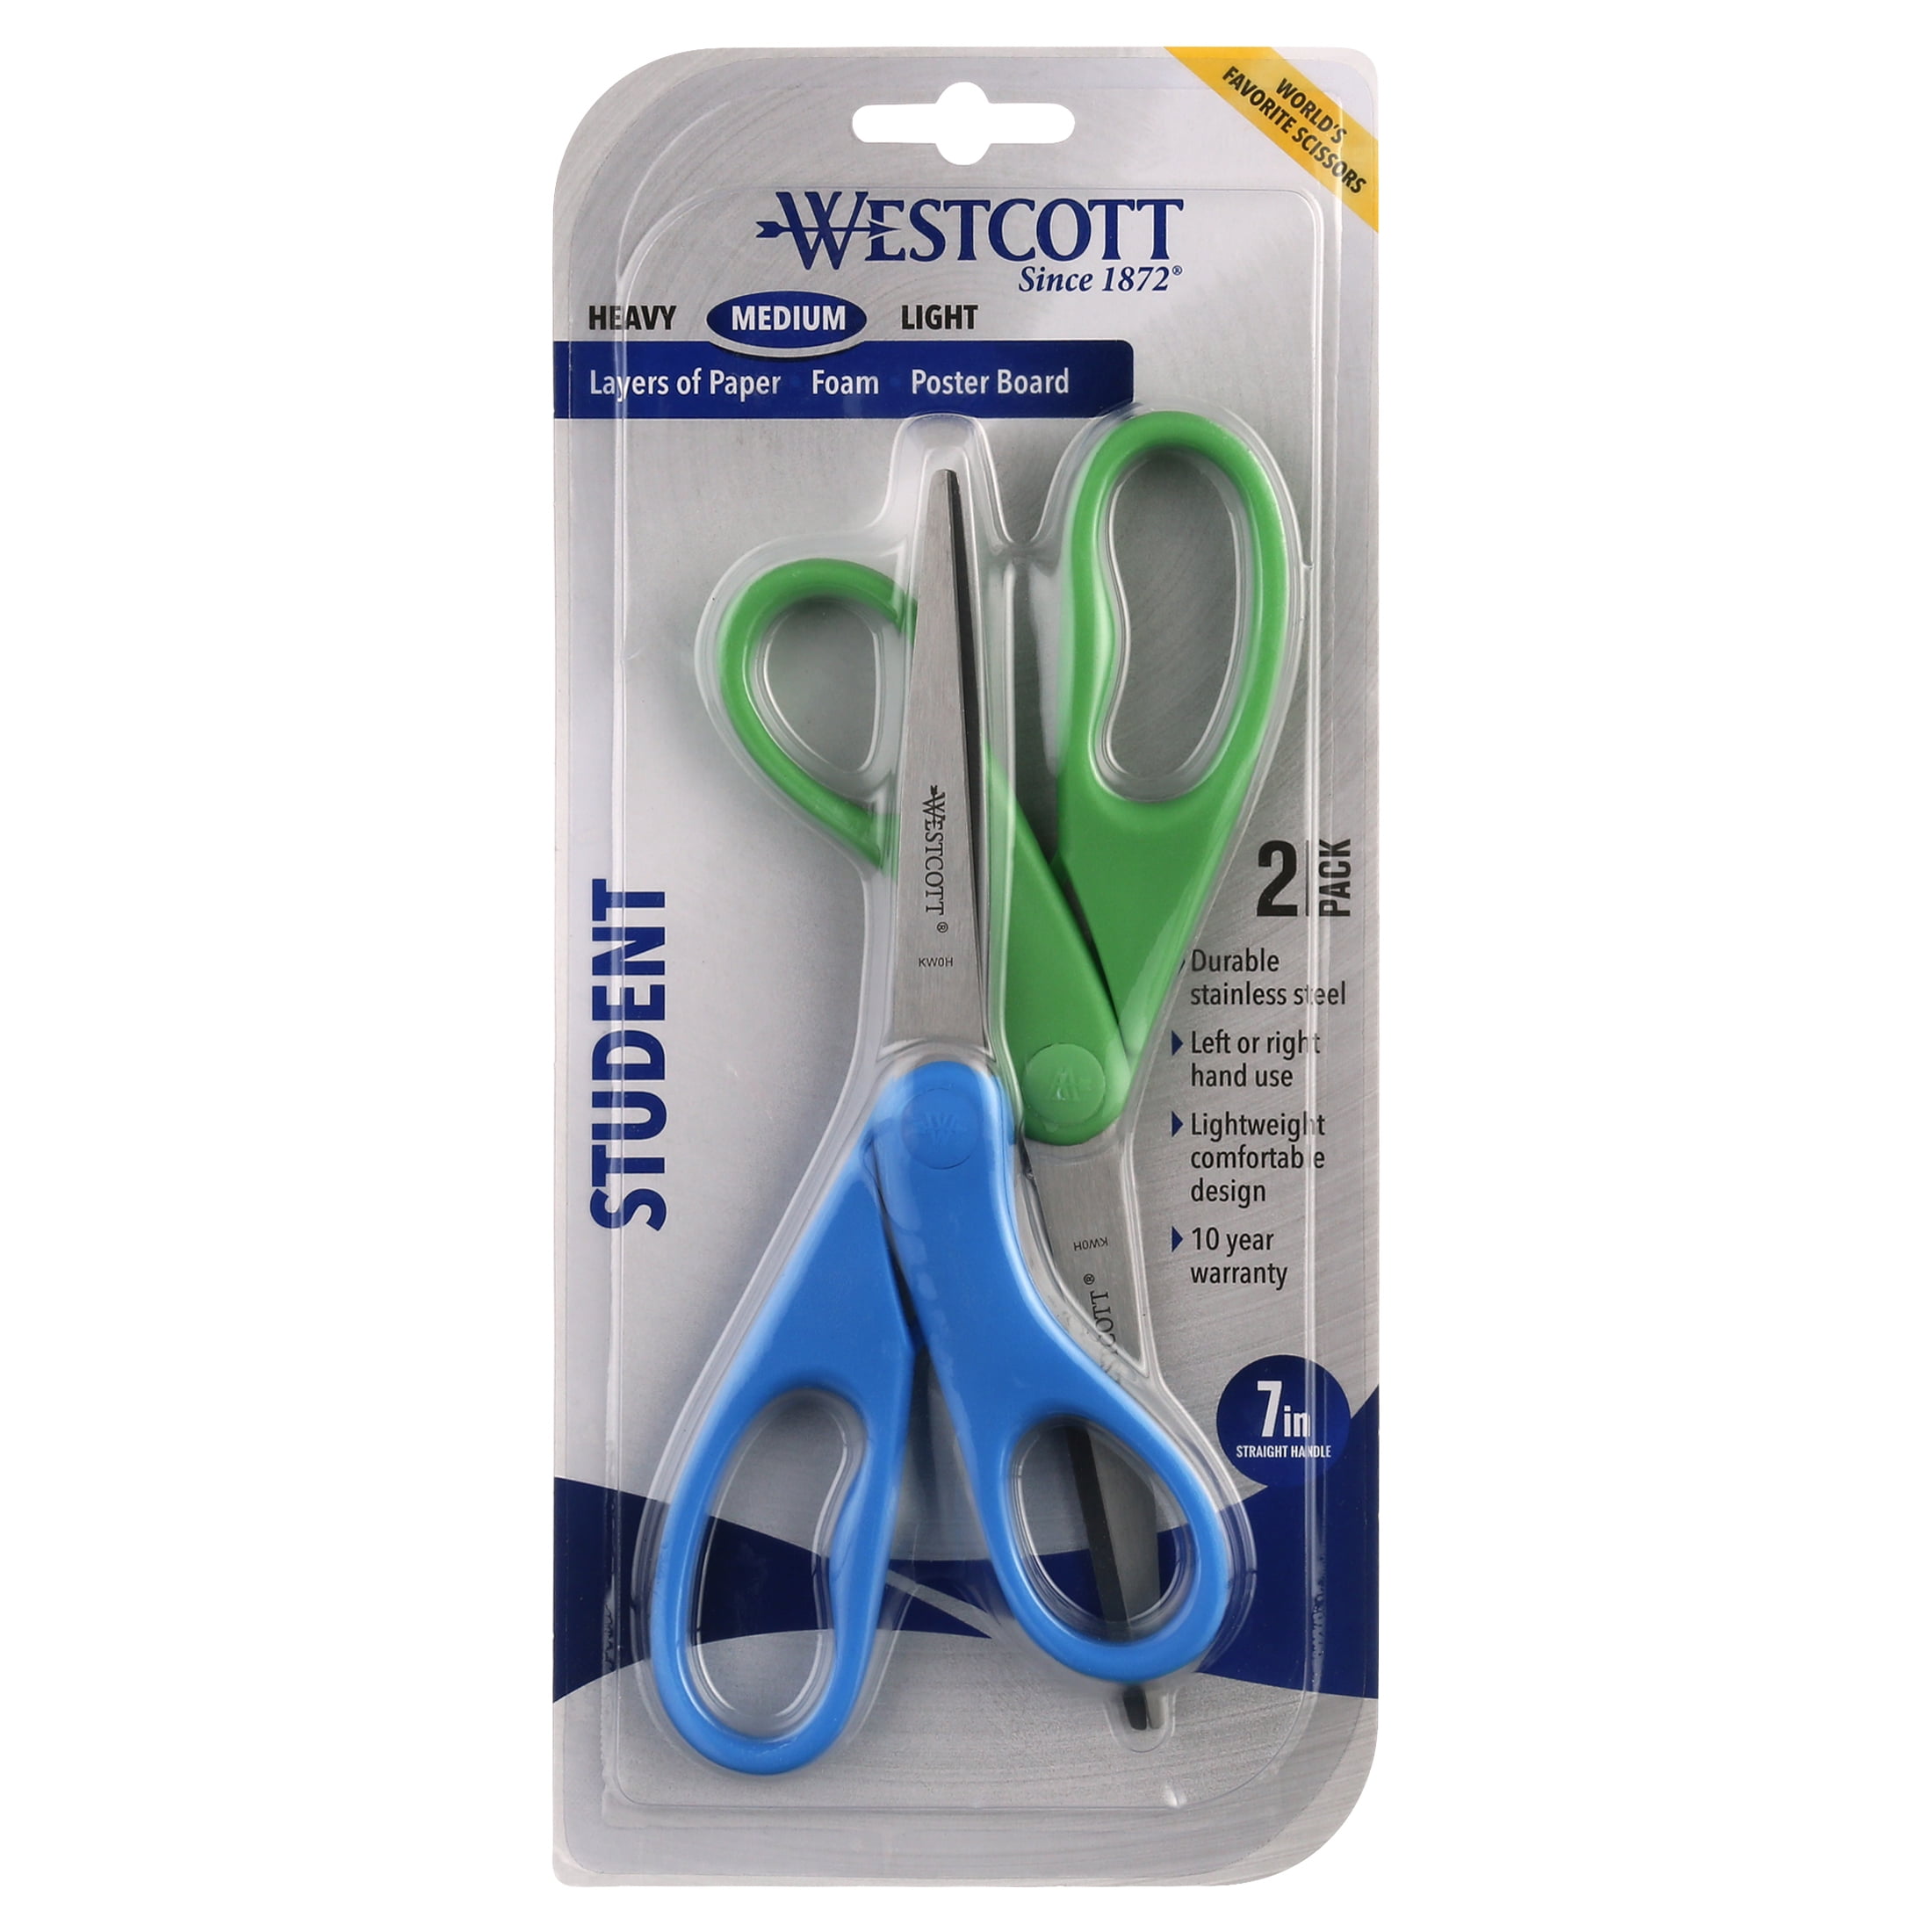 Westcott - Westcott 7 Fun and Fashionable Student Scissors (16401)